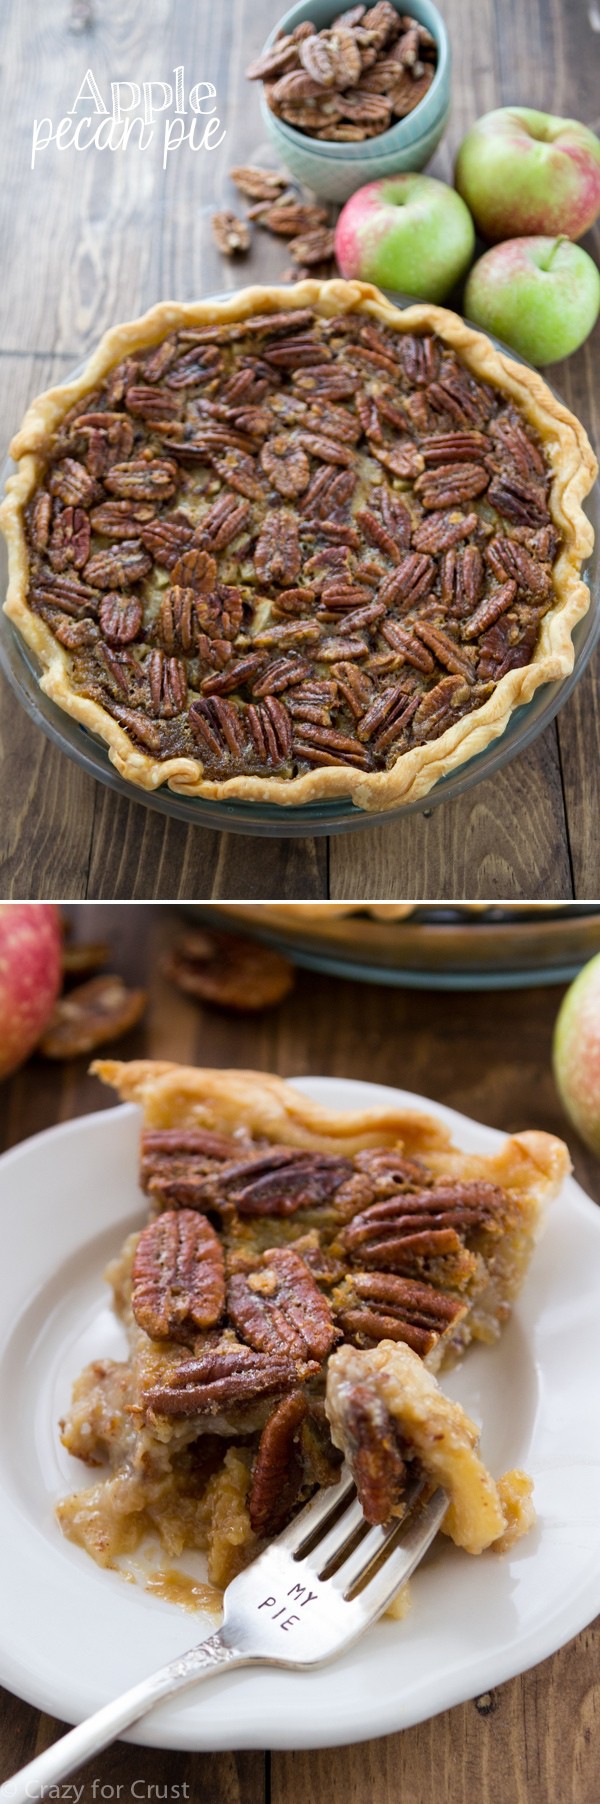 Apple Pecan Pie - Apple Pie and Pecan Pie all in one dessert recipe!